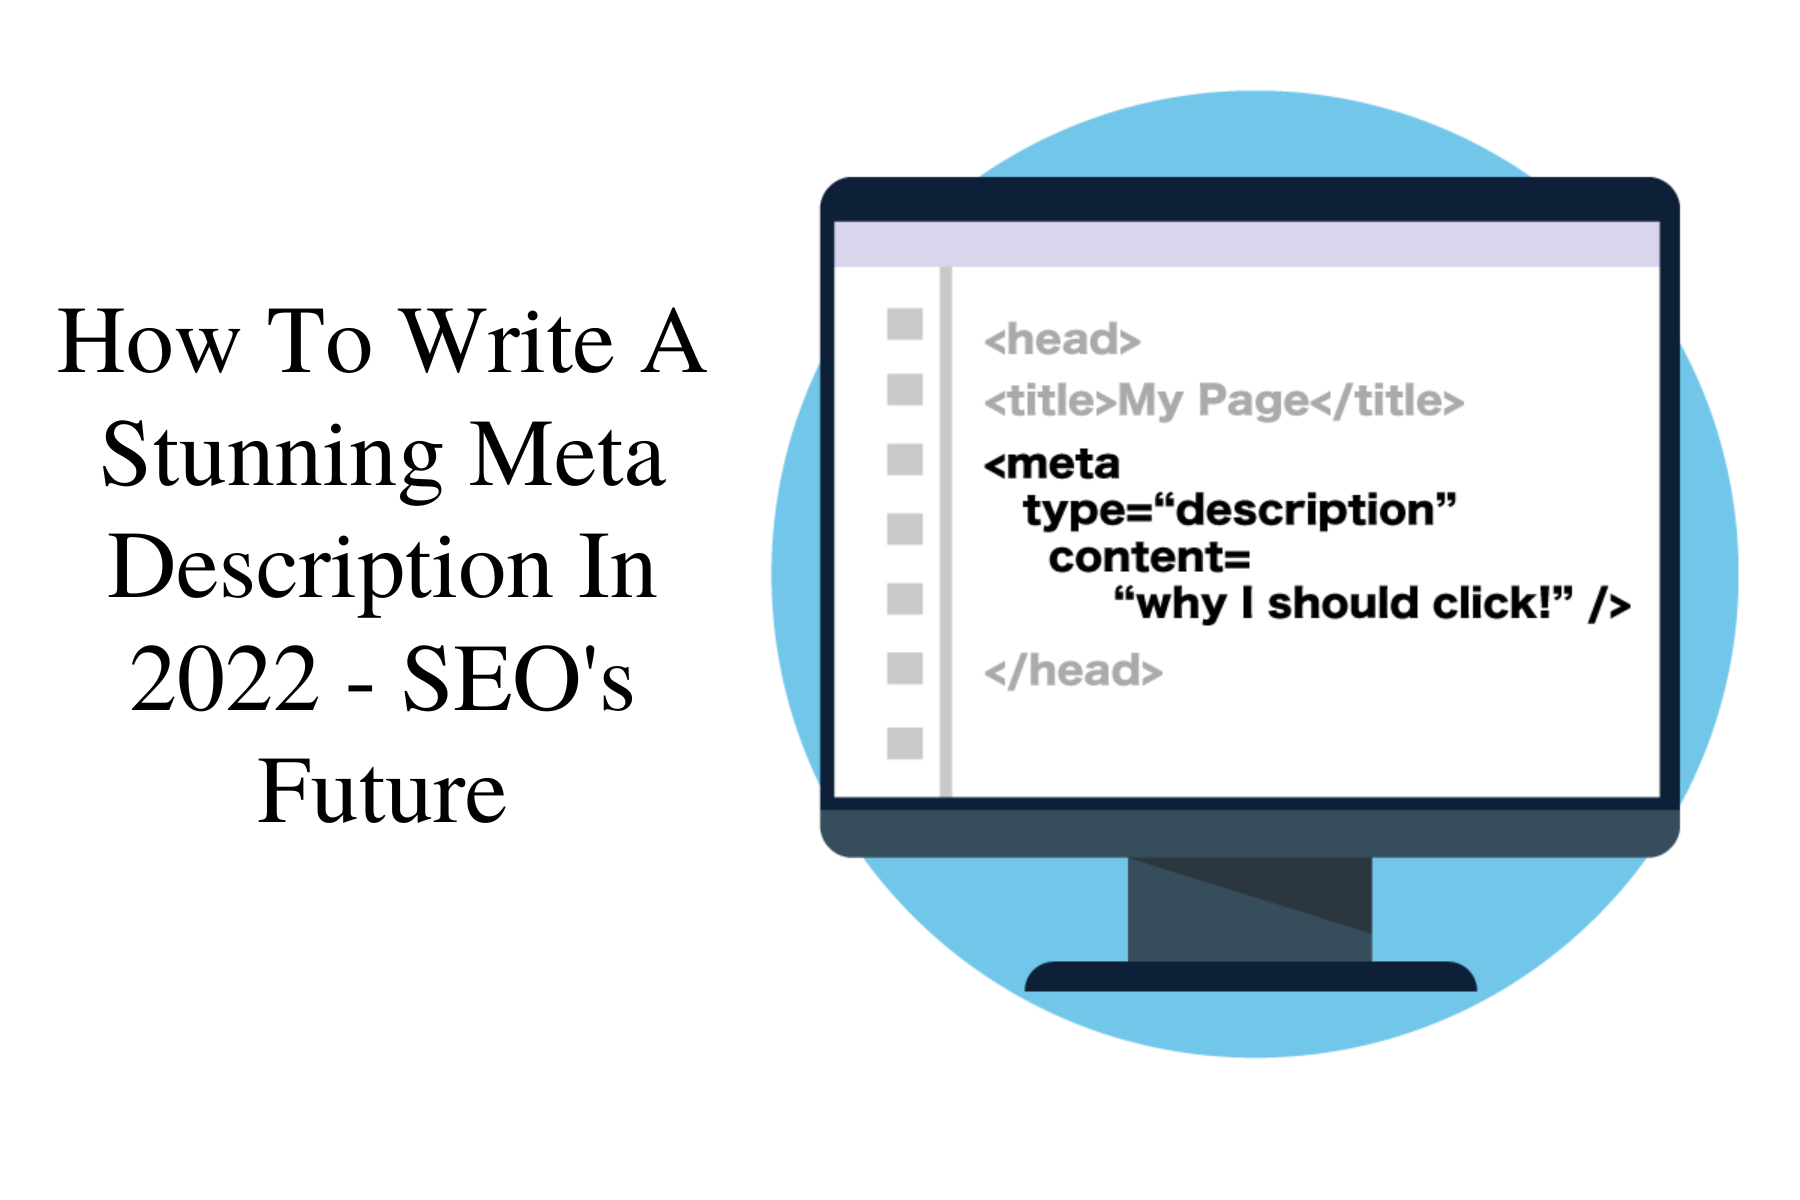 How To Write A Stunning Meta Description In 2022 - SEO's Future